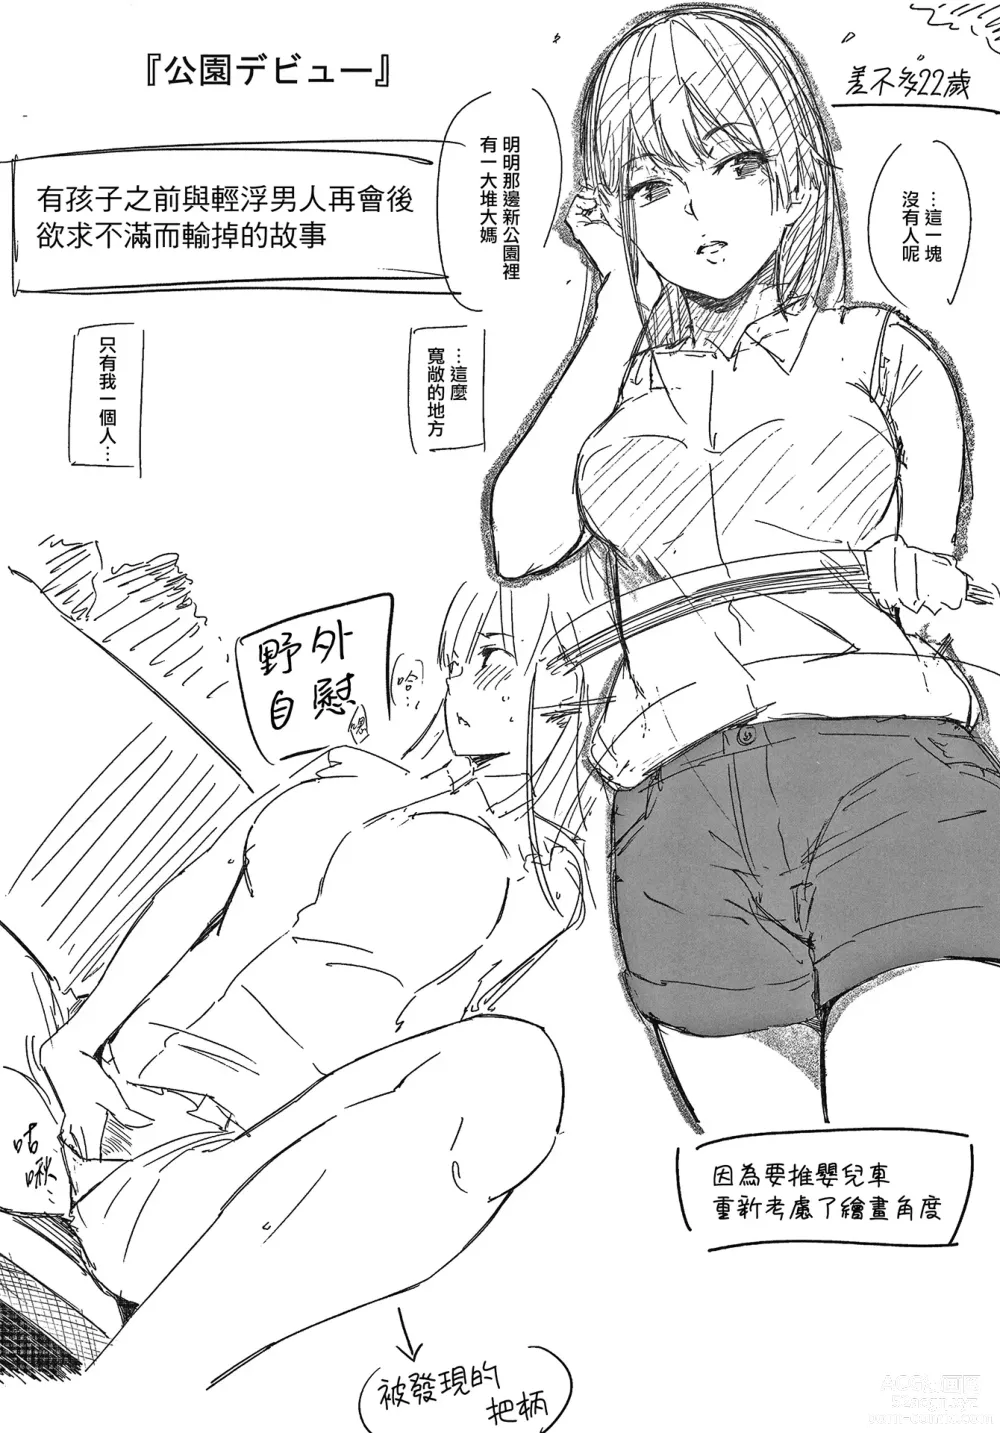 Page 192 of manga 祕密x祕密 (uncensored)